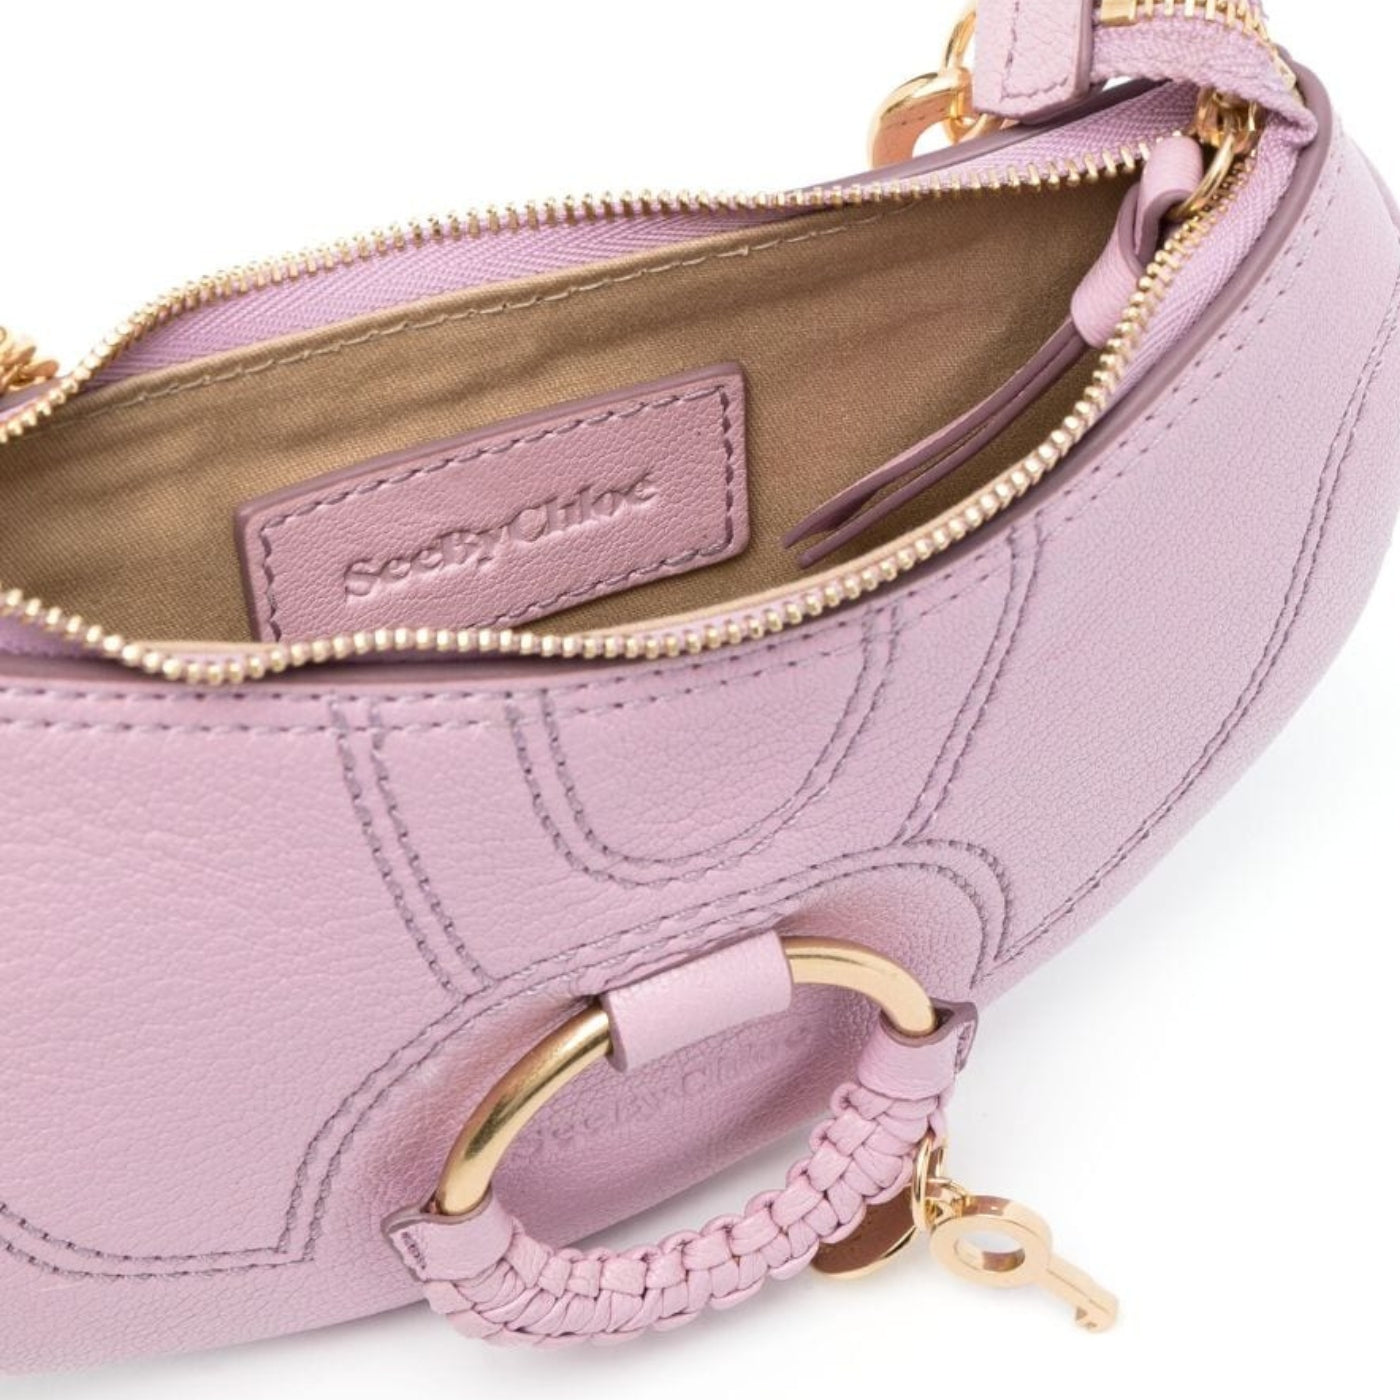 Hana Clutch Bag in Lavender Mist Handbags SEE BY CHLOE - LOLAMIR